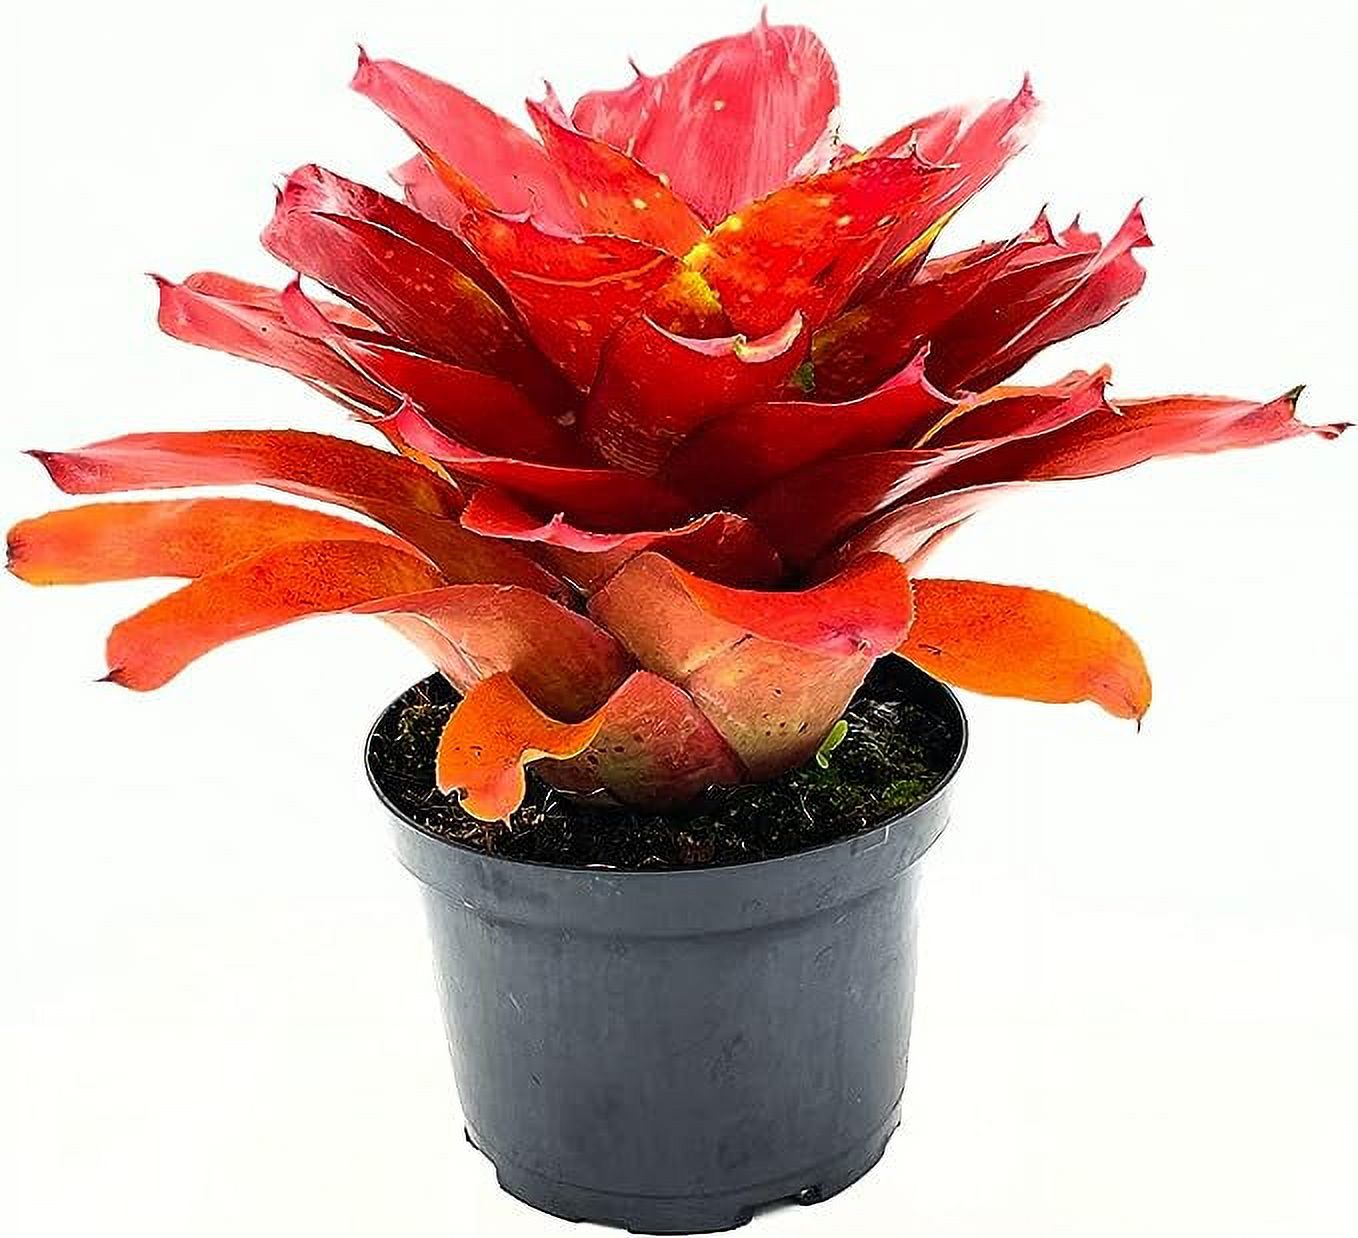 ragnaroc Live Plants – Bromeliad Neoregelia Lamberts Pride, 8-12" in 6" Pot - 1ct - Live Arrival Guaranteed - House Plants for Home Decor & Gift - image 1 of 5